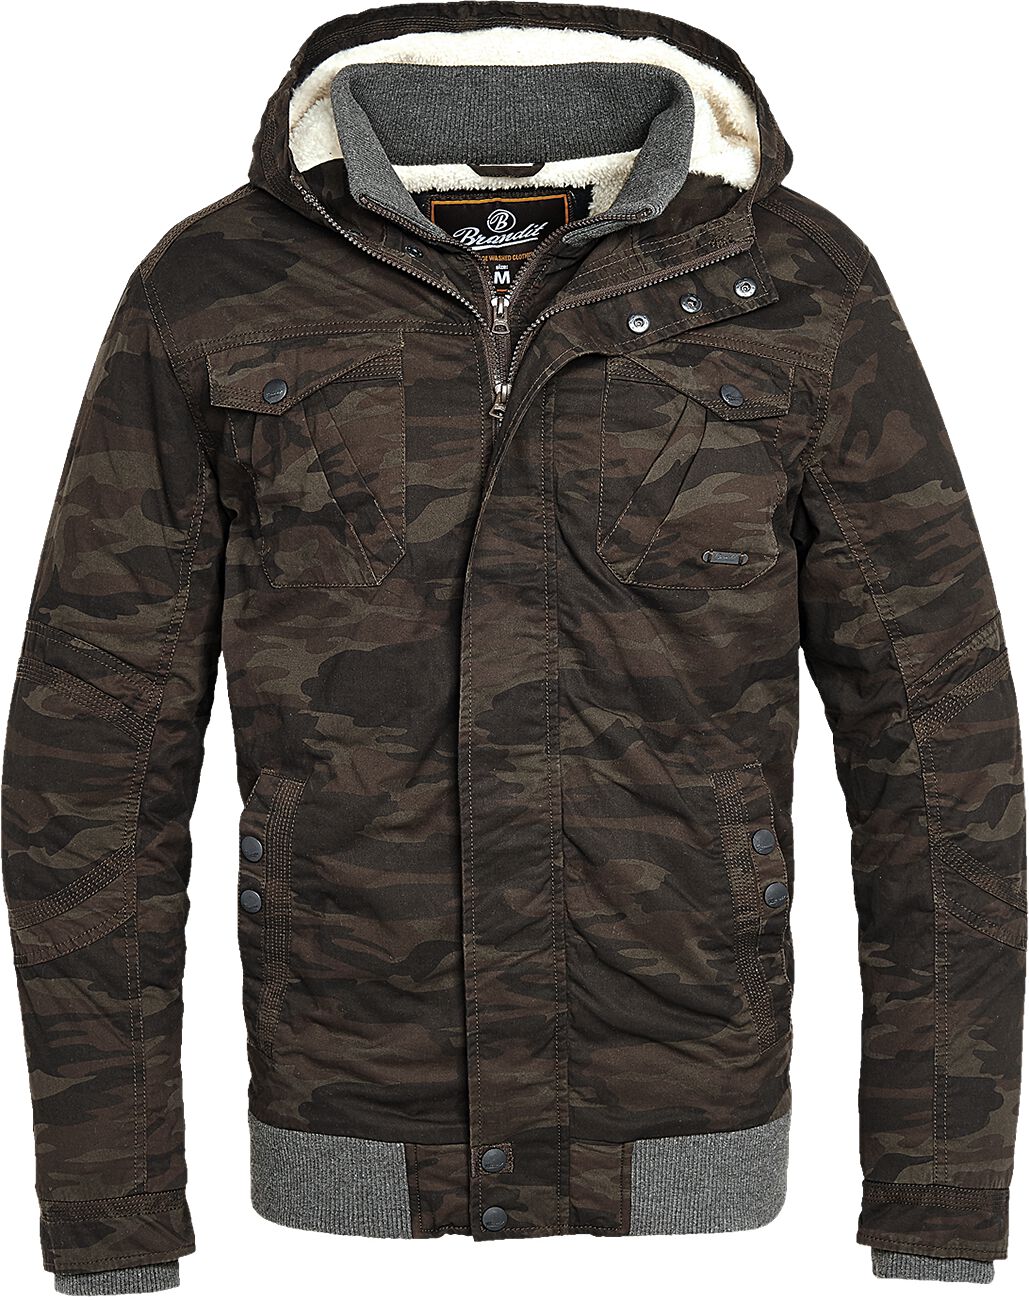 Brandit Parkmont Jacket Winterjacke camouflage in 5XL